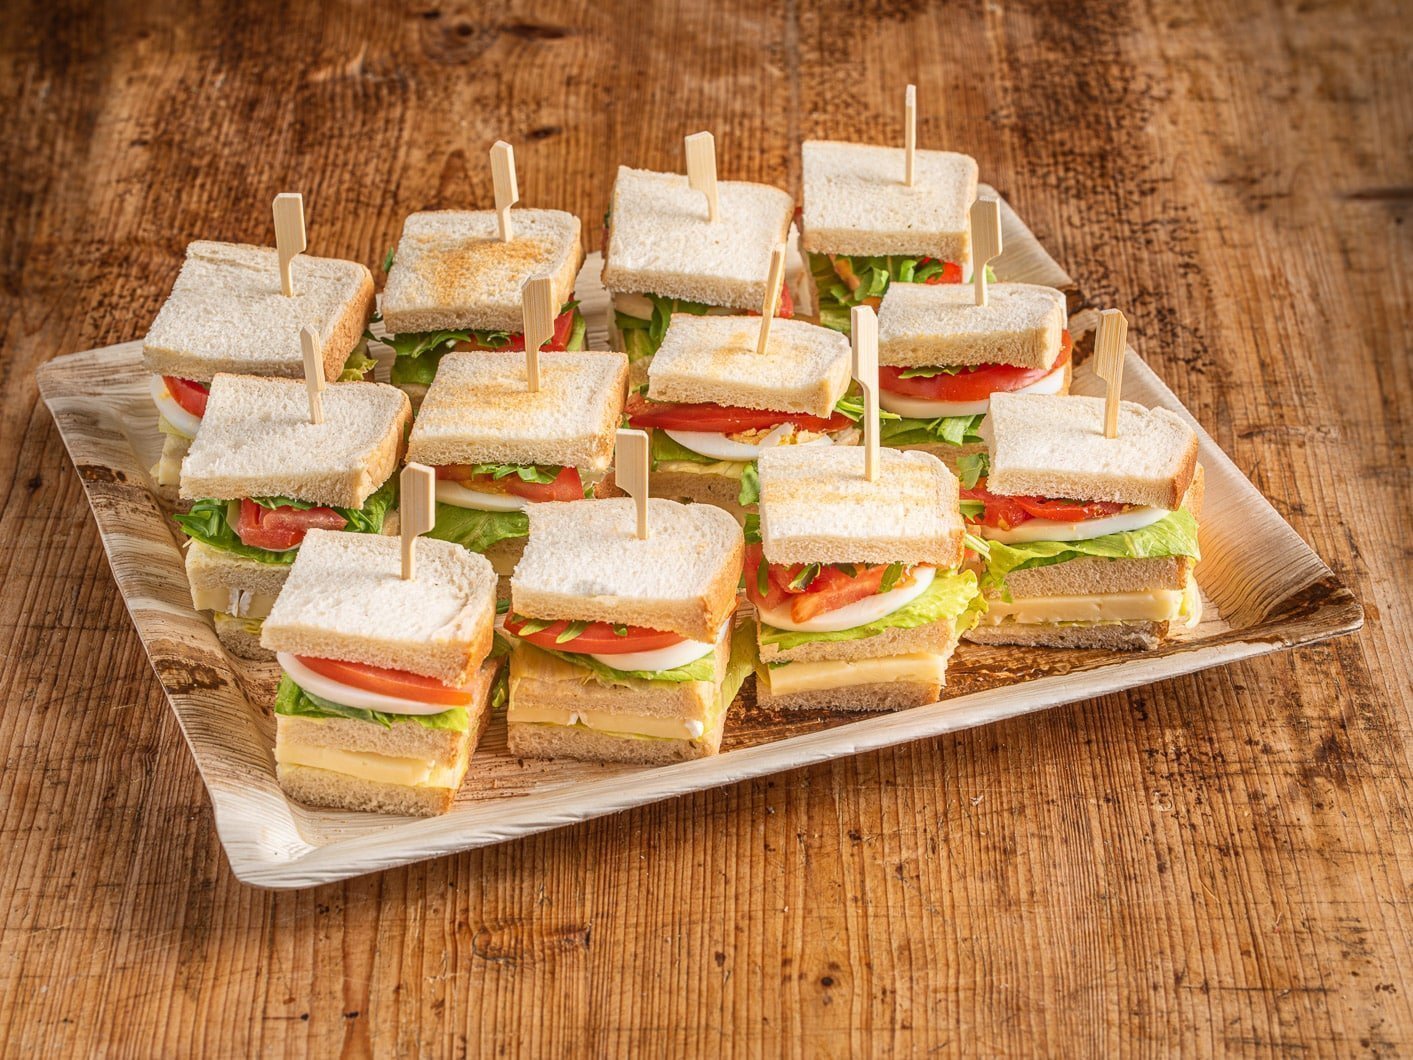 Сэндвичи играть. Мини клаб сэндвич. Бутерброды на день рождения. Мини бутерброды. Сэндвичи для фуршета.